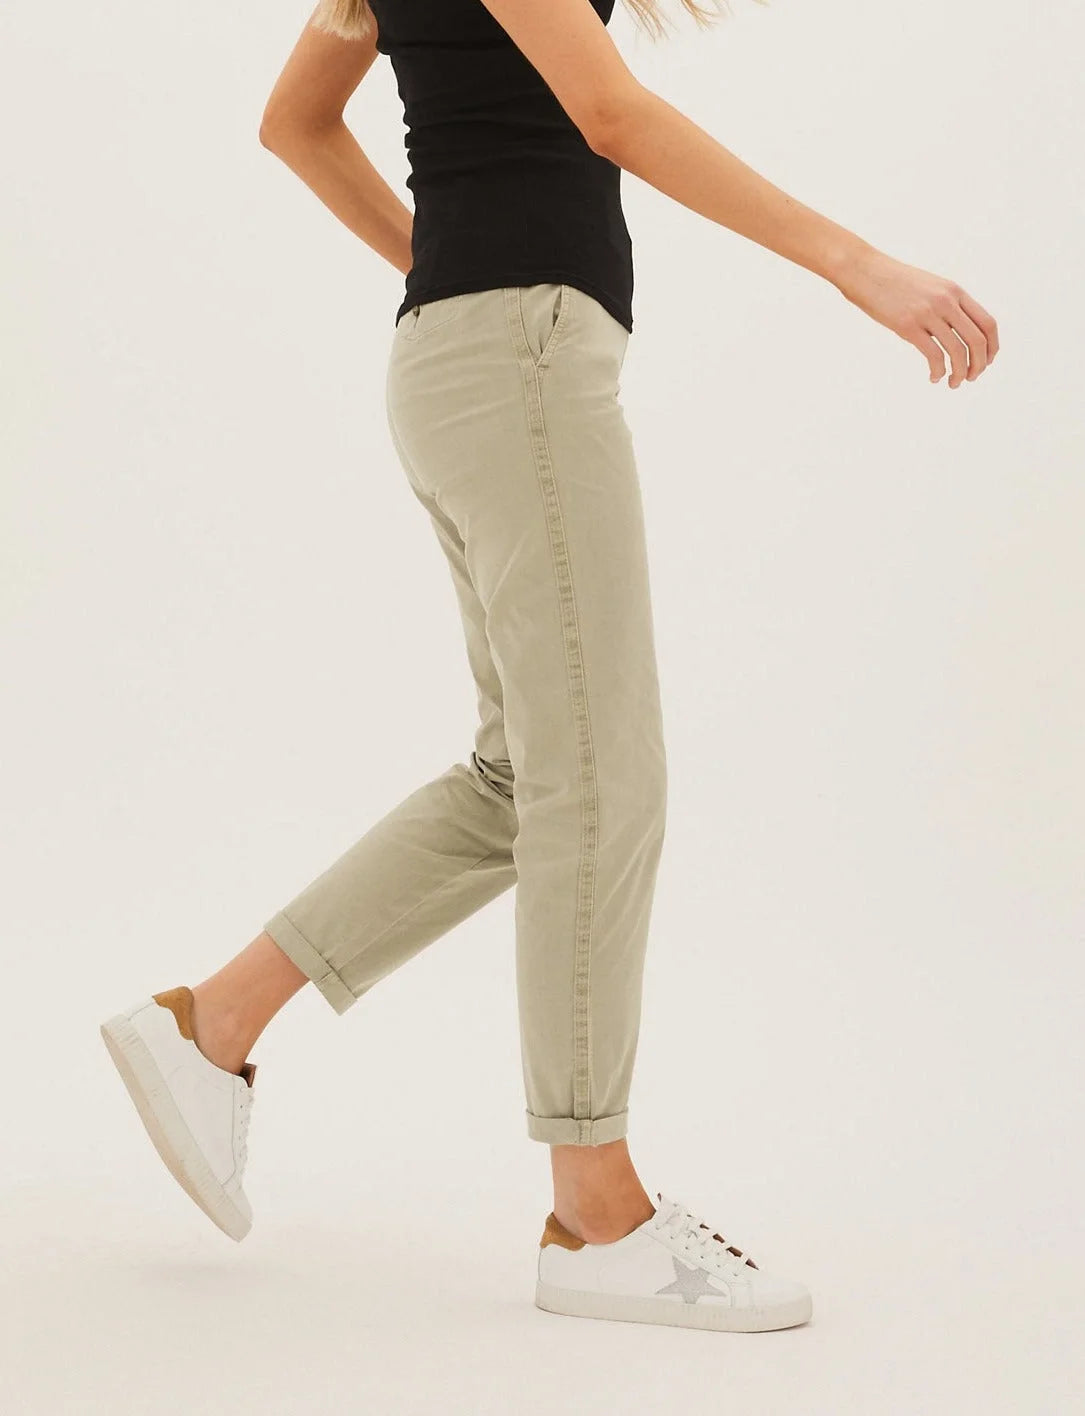 M&S Ankle Grazer Chino Trousers Beige / 8 / Reg